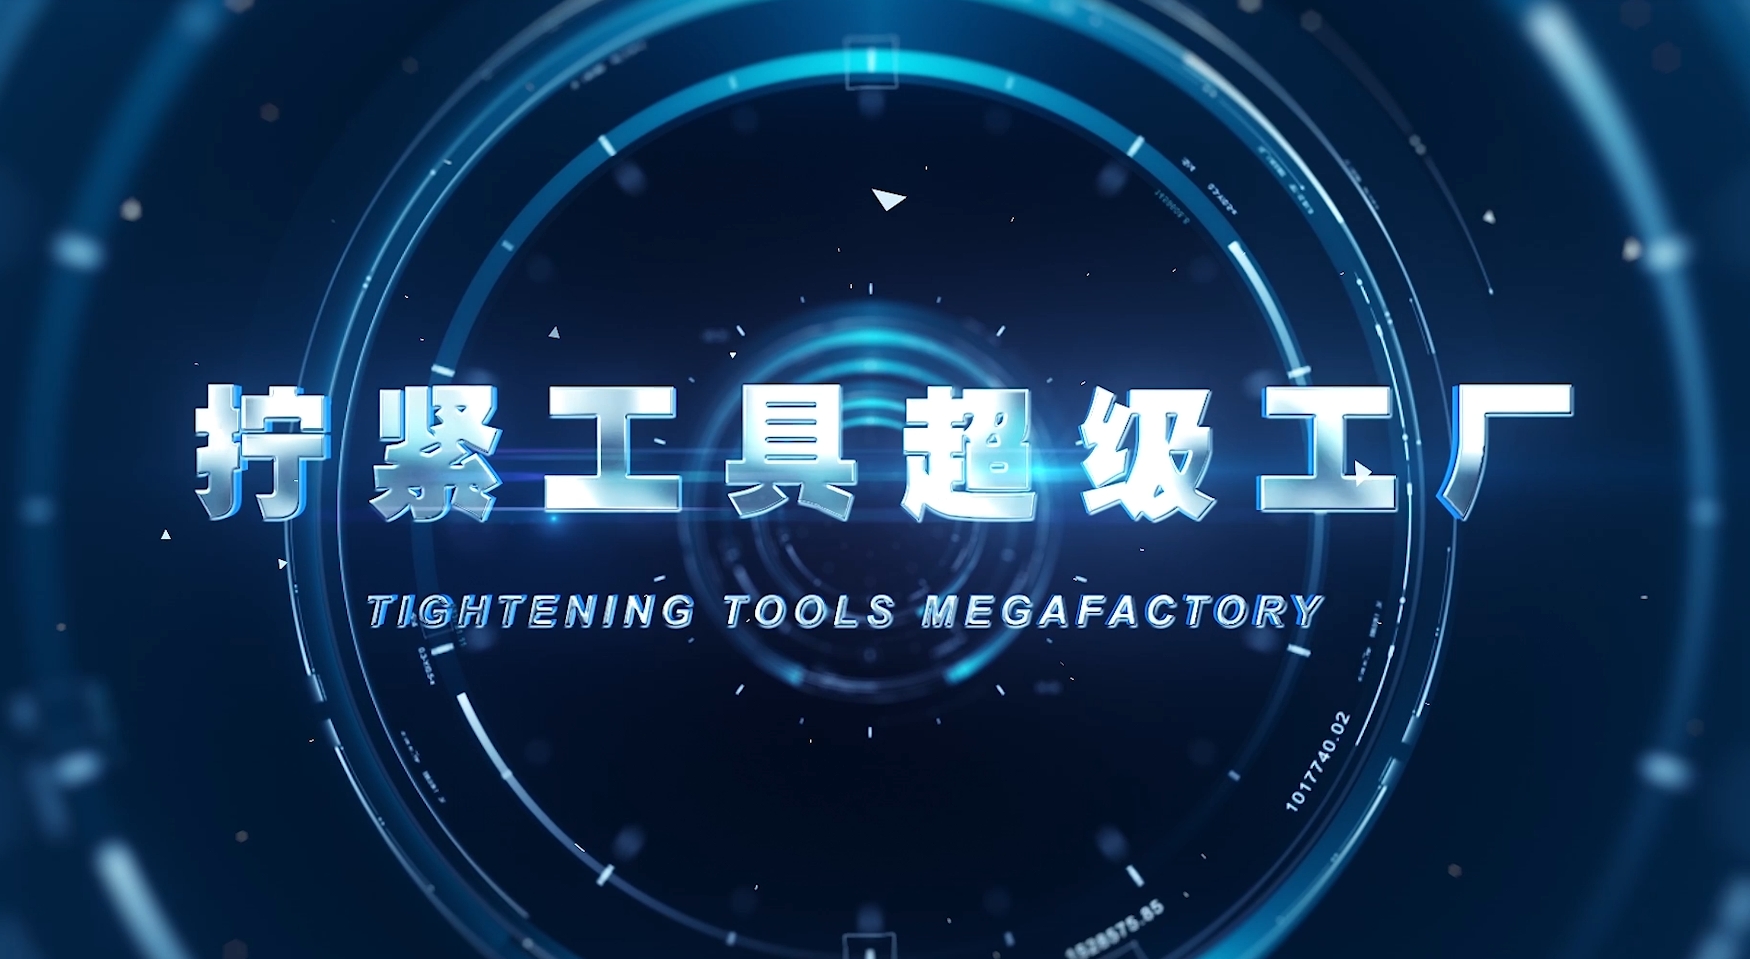 Tightening Tool Megafactory”